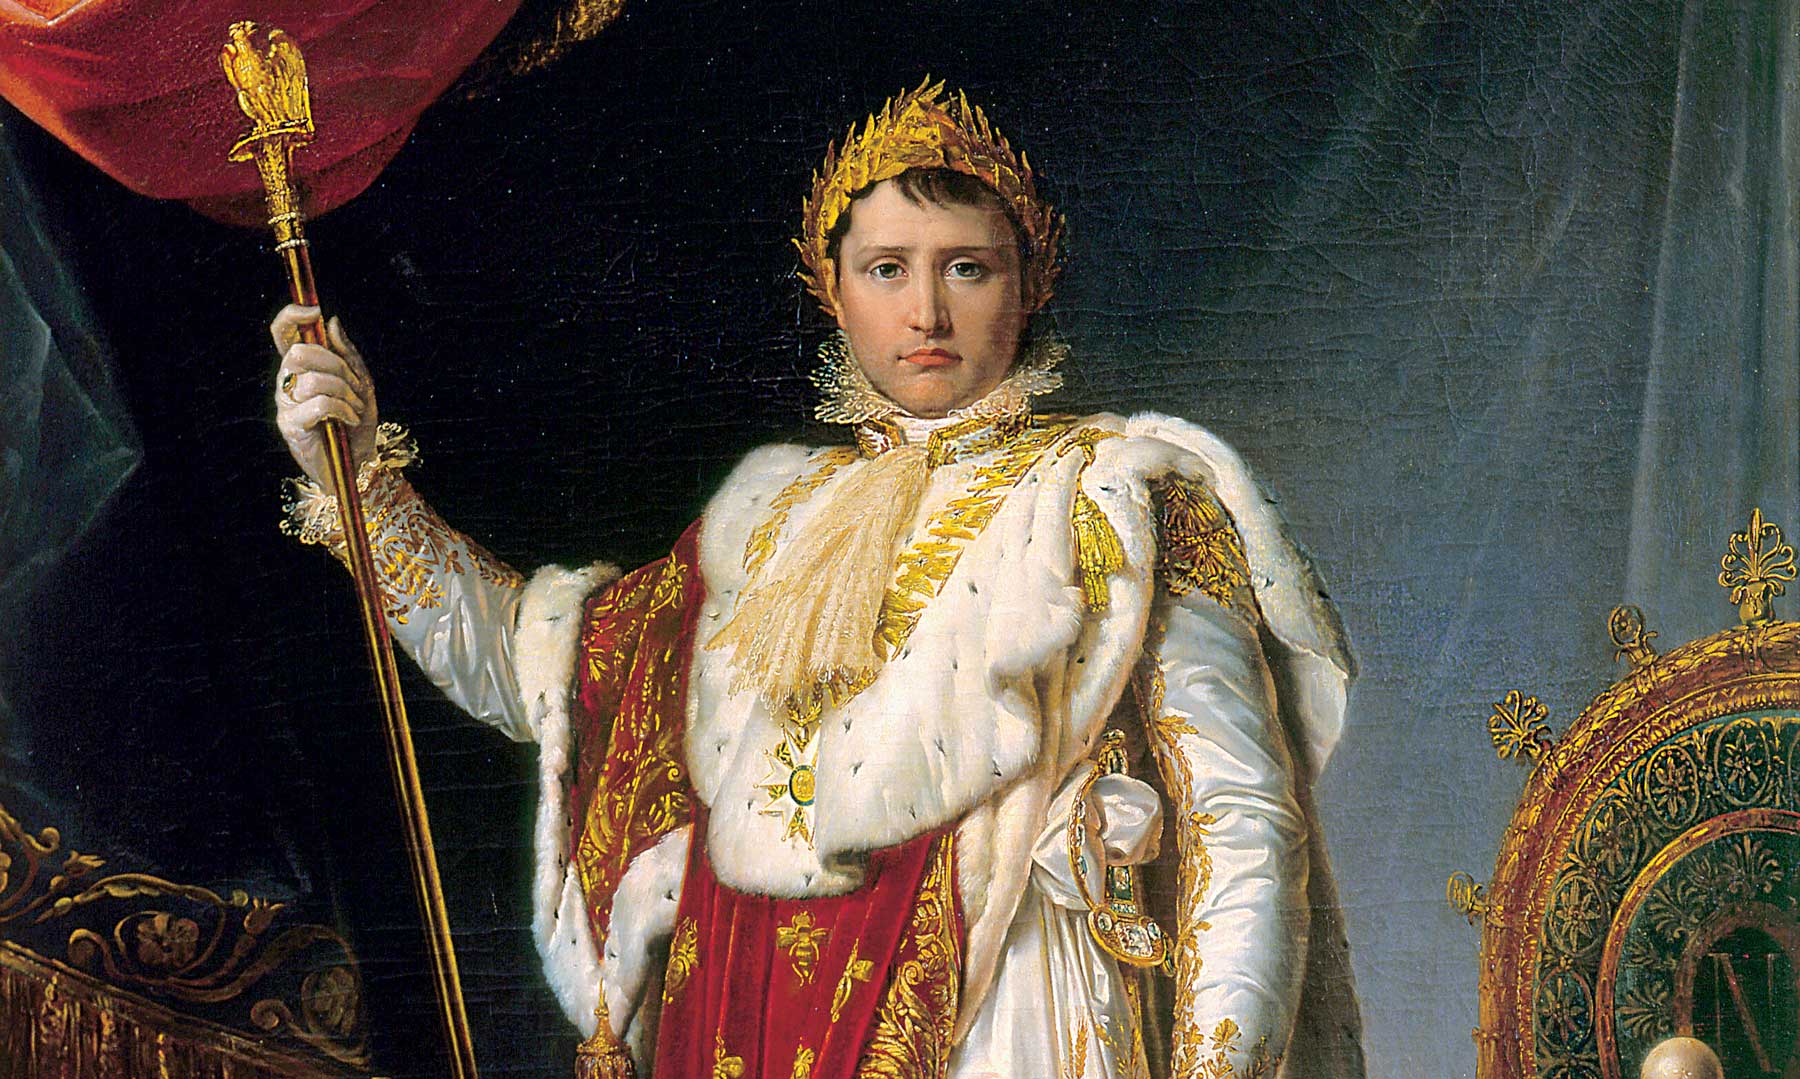 Napoleon Power and Splendor THE DECORATIVE ARTS TRUST